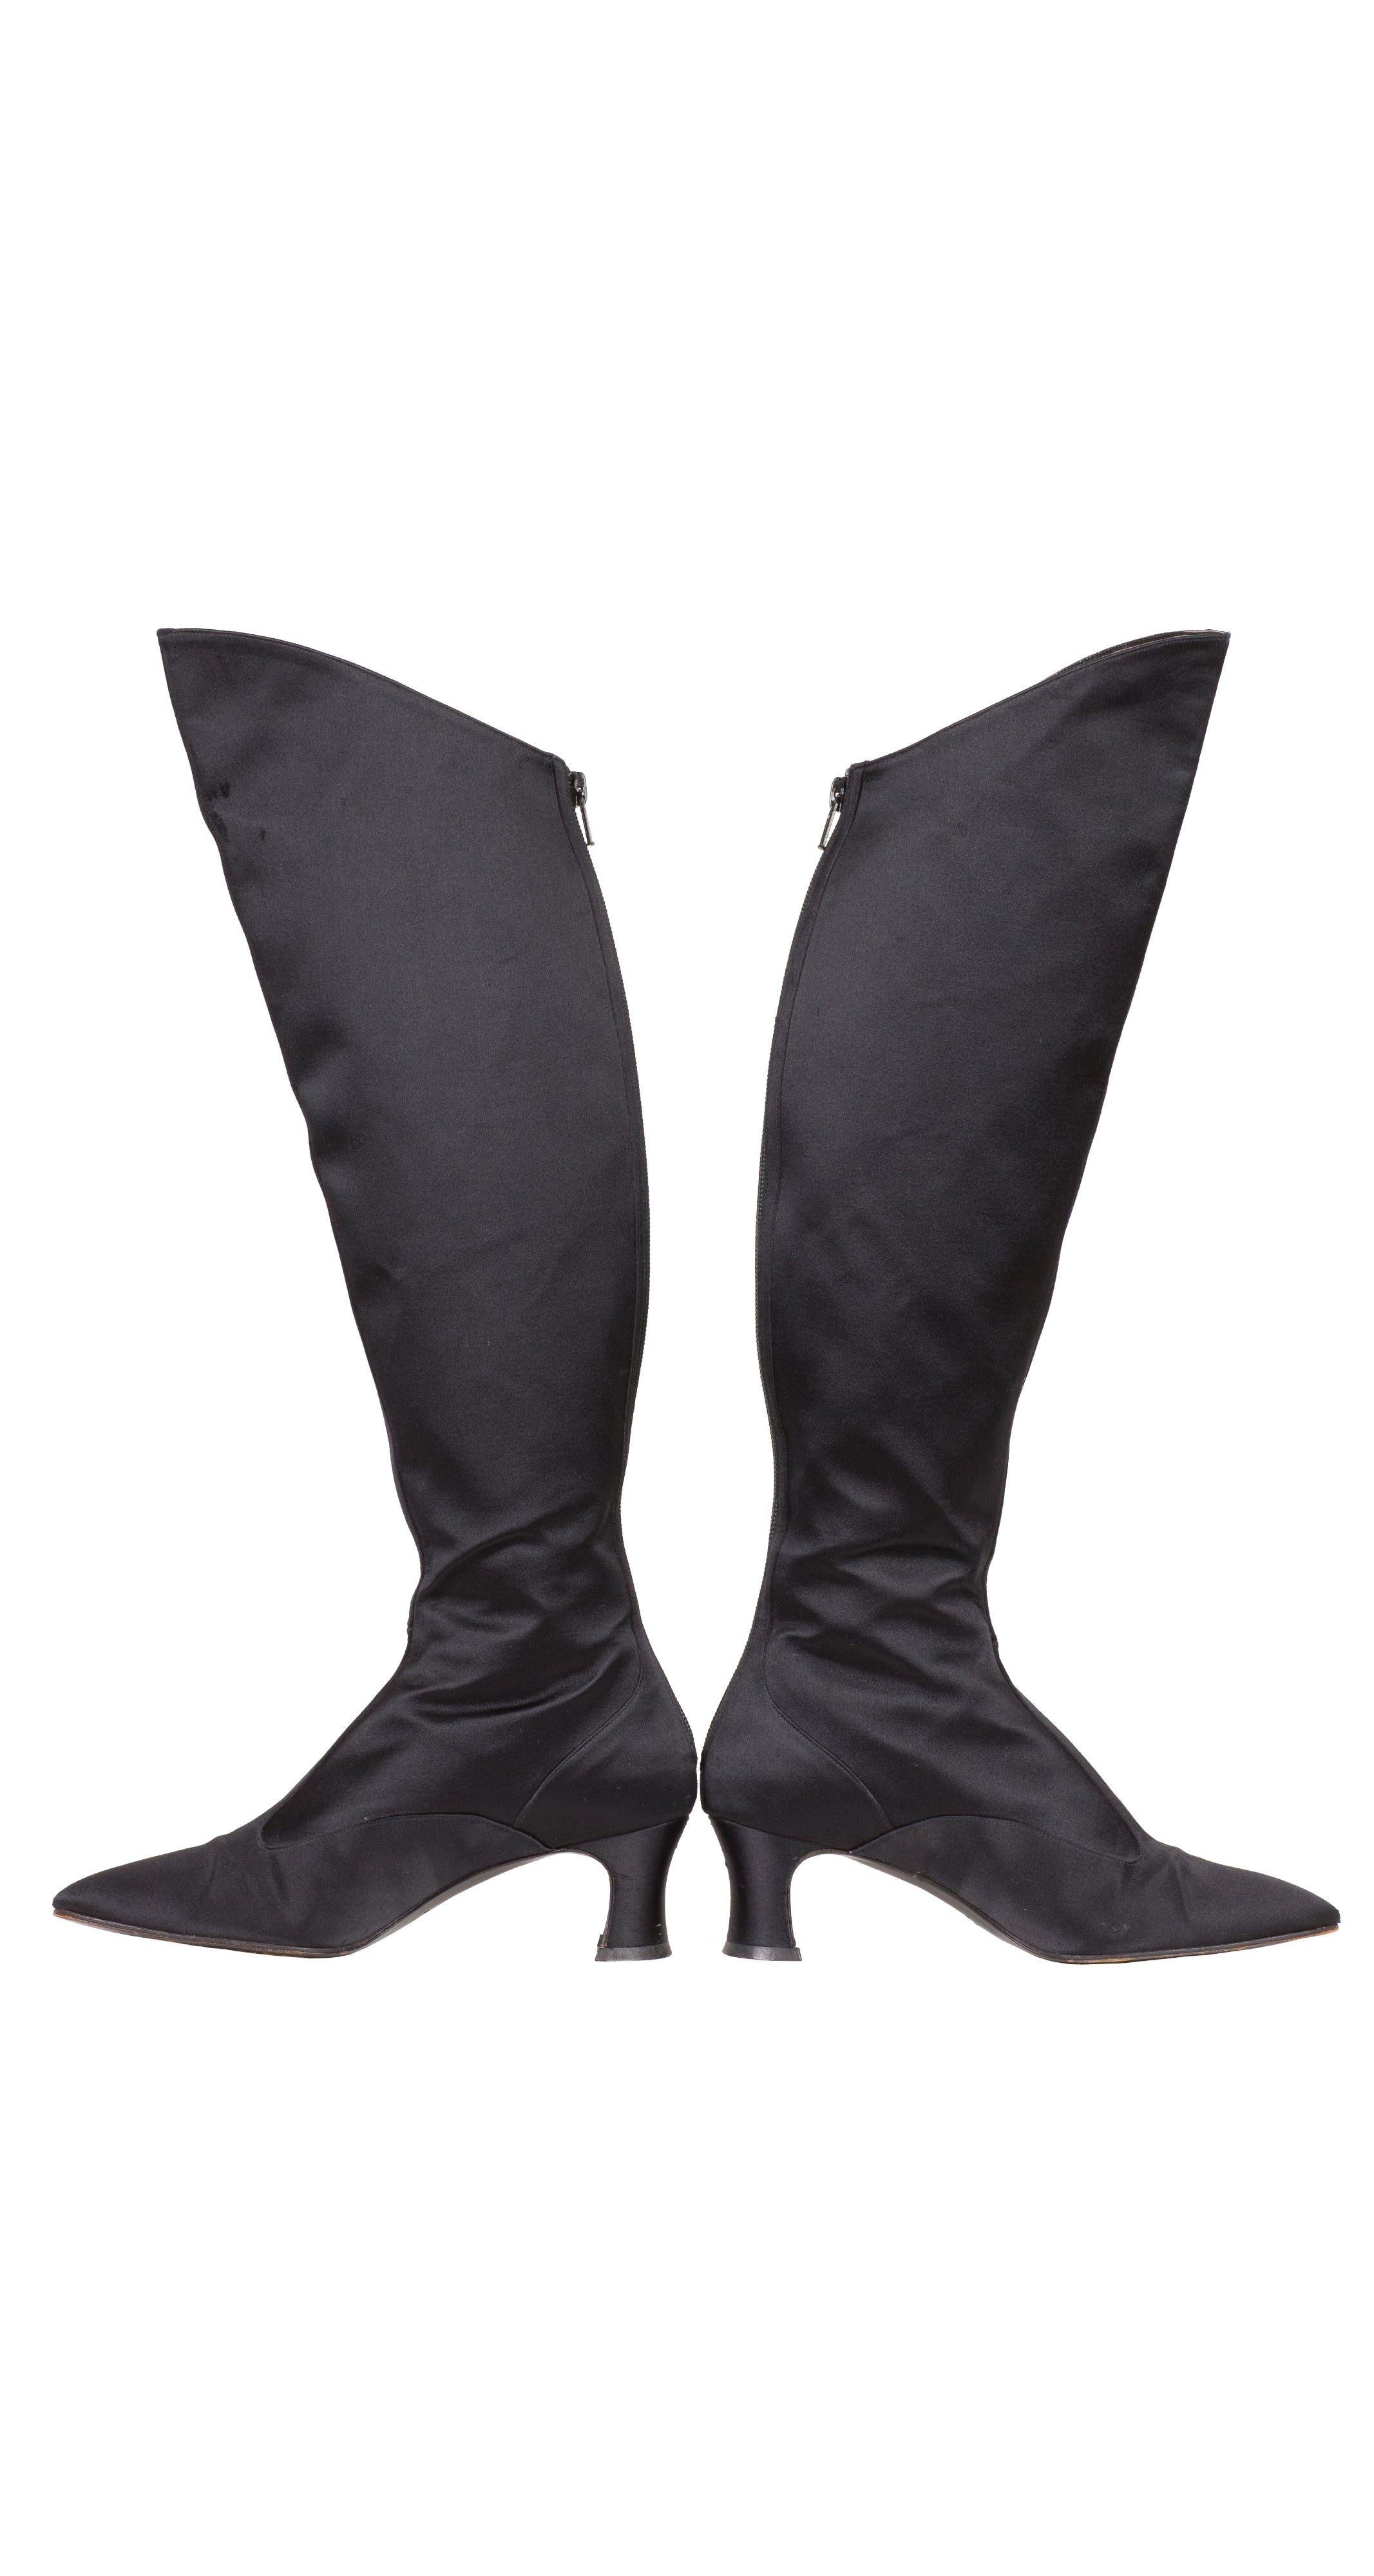 1980s Black Silk Satin Knee-High Spool Heel Boots